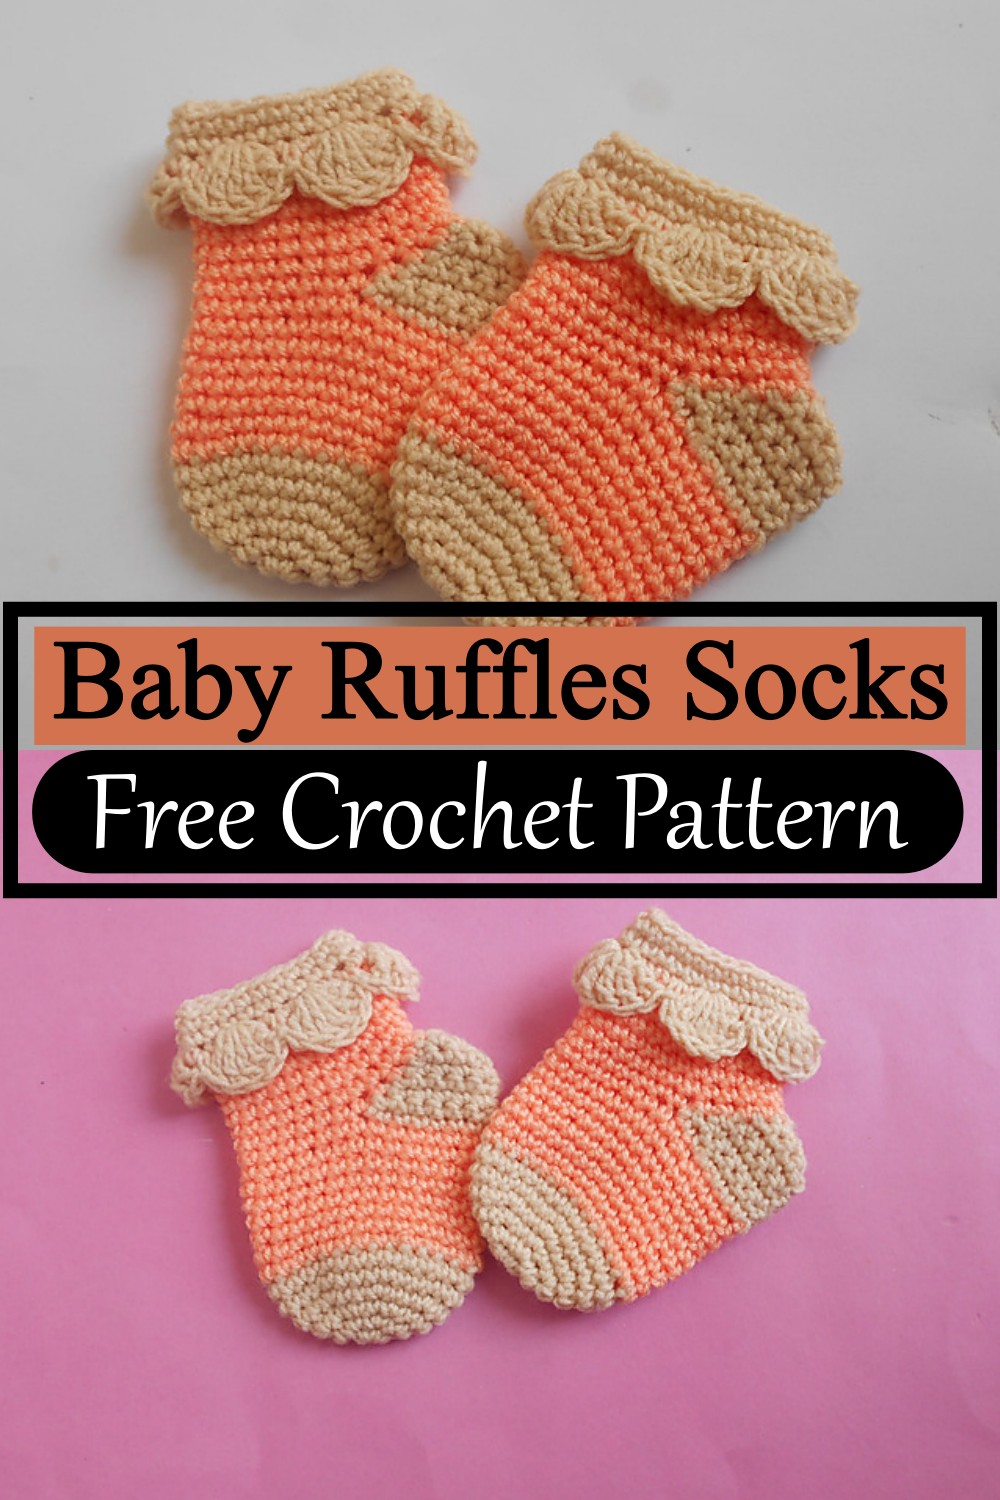 Baby Ruffles Socks